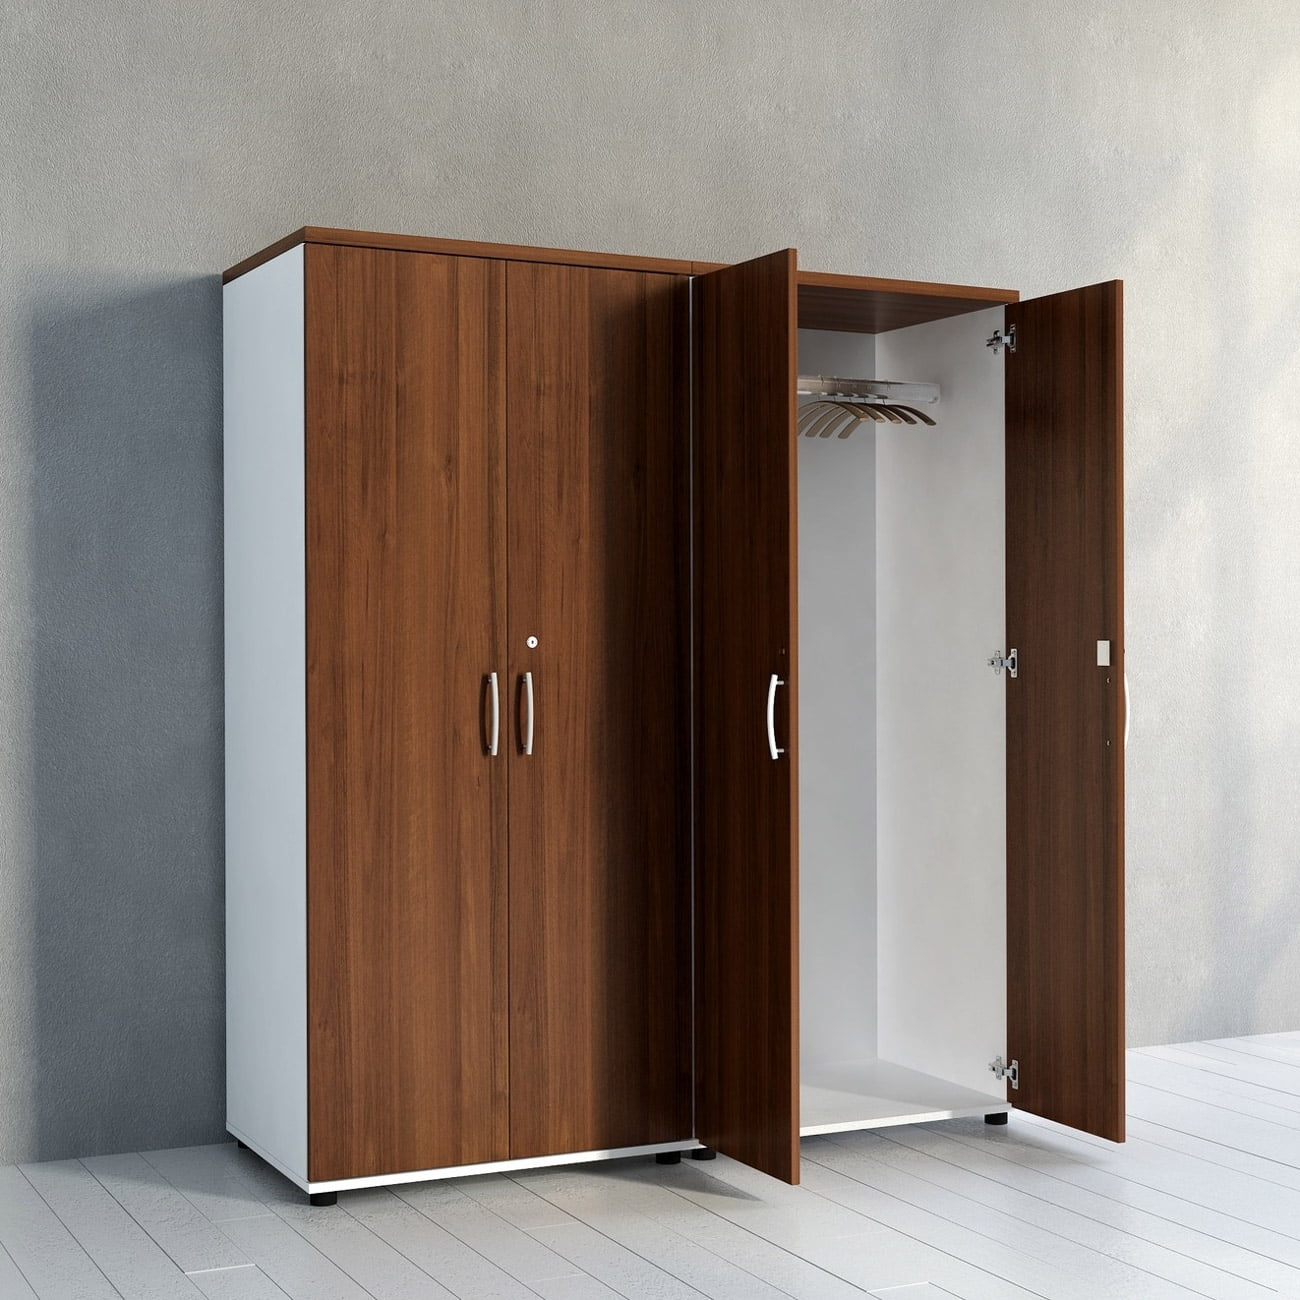 Wooden wardrobe cabinet